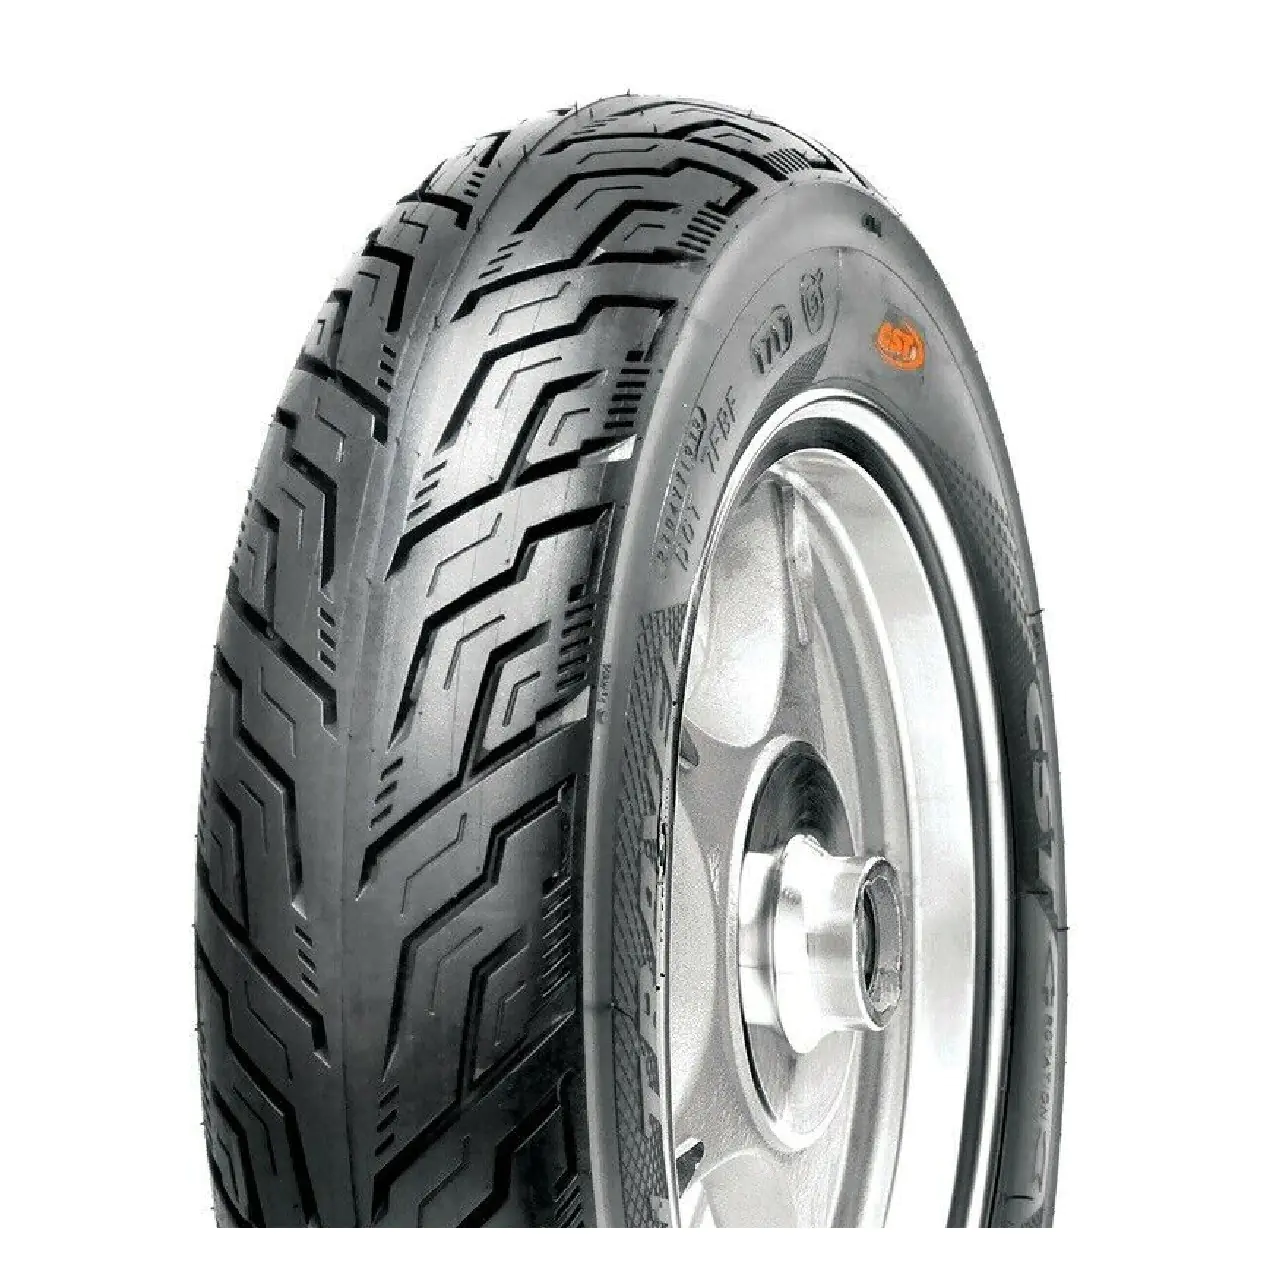 CST Tyres CST Tyres 150/70-14 66S CM577 pneumatici nuovi Estivo 